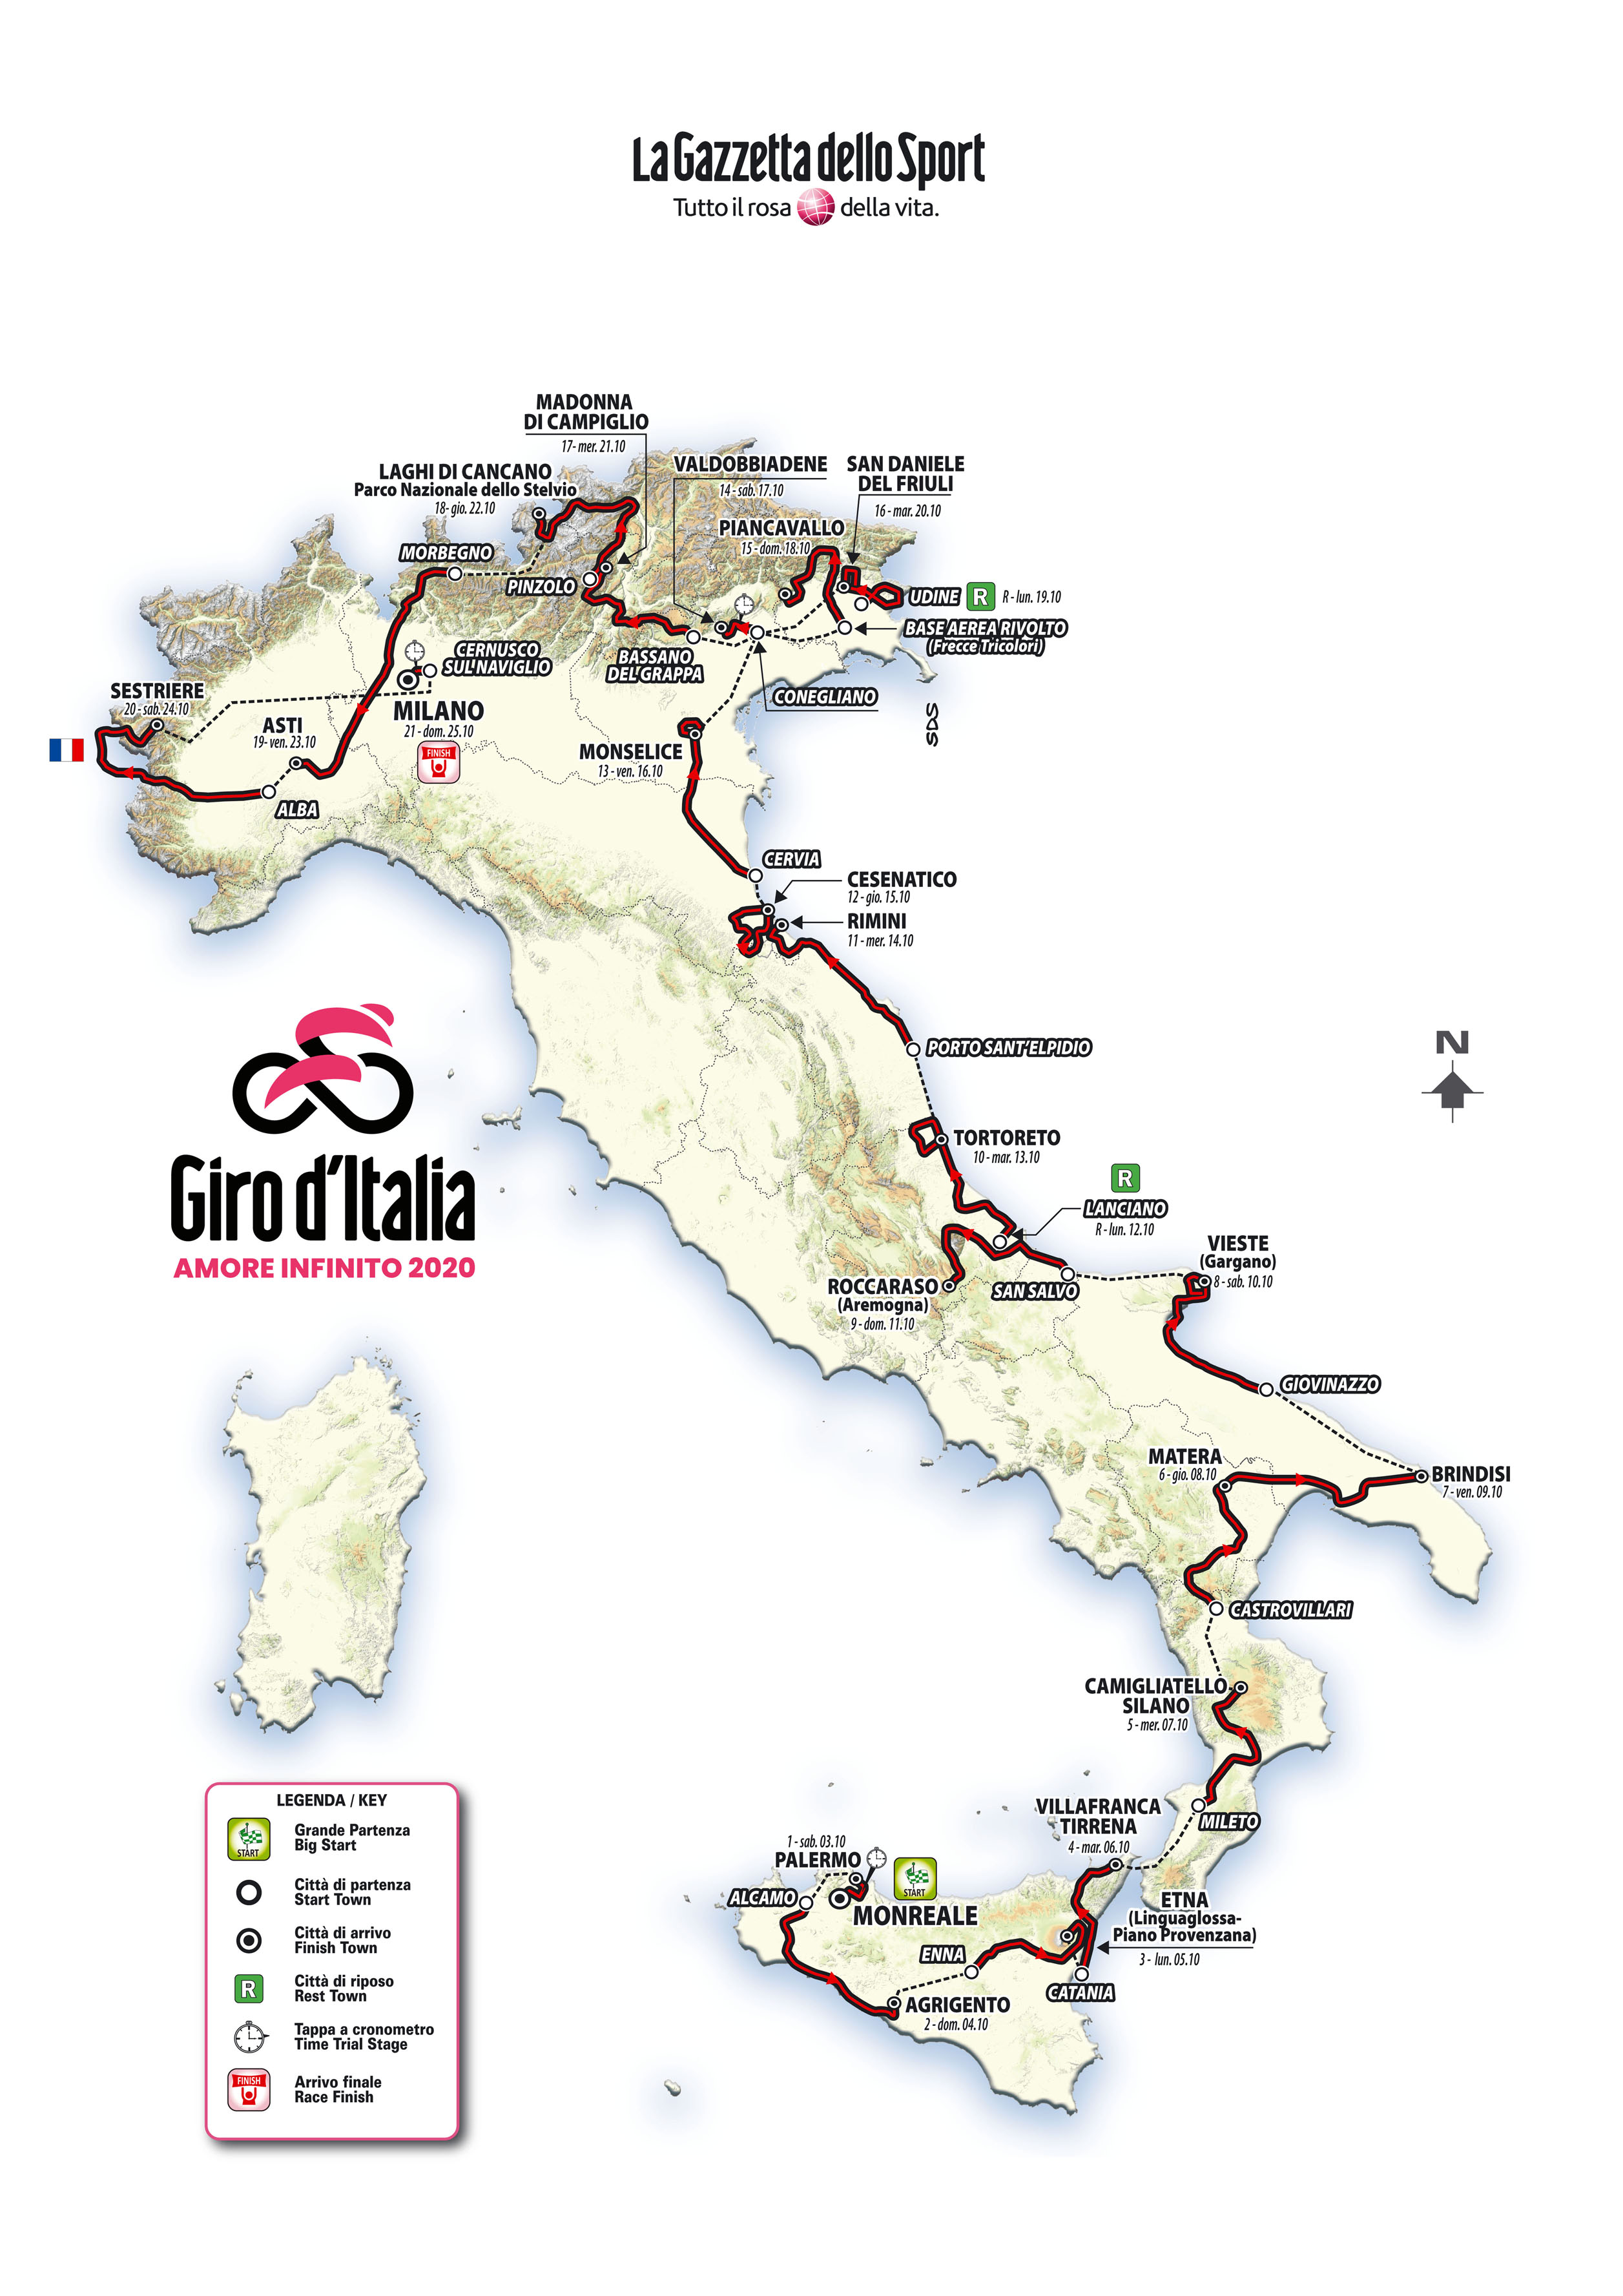 The map of the 2020 Giro d'Italia